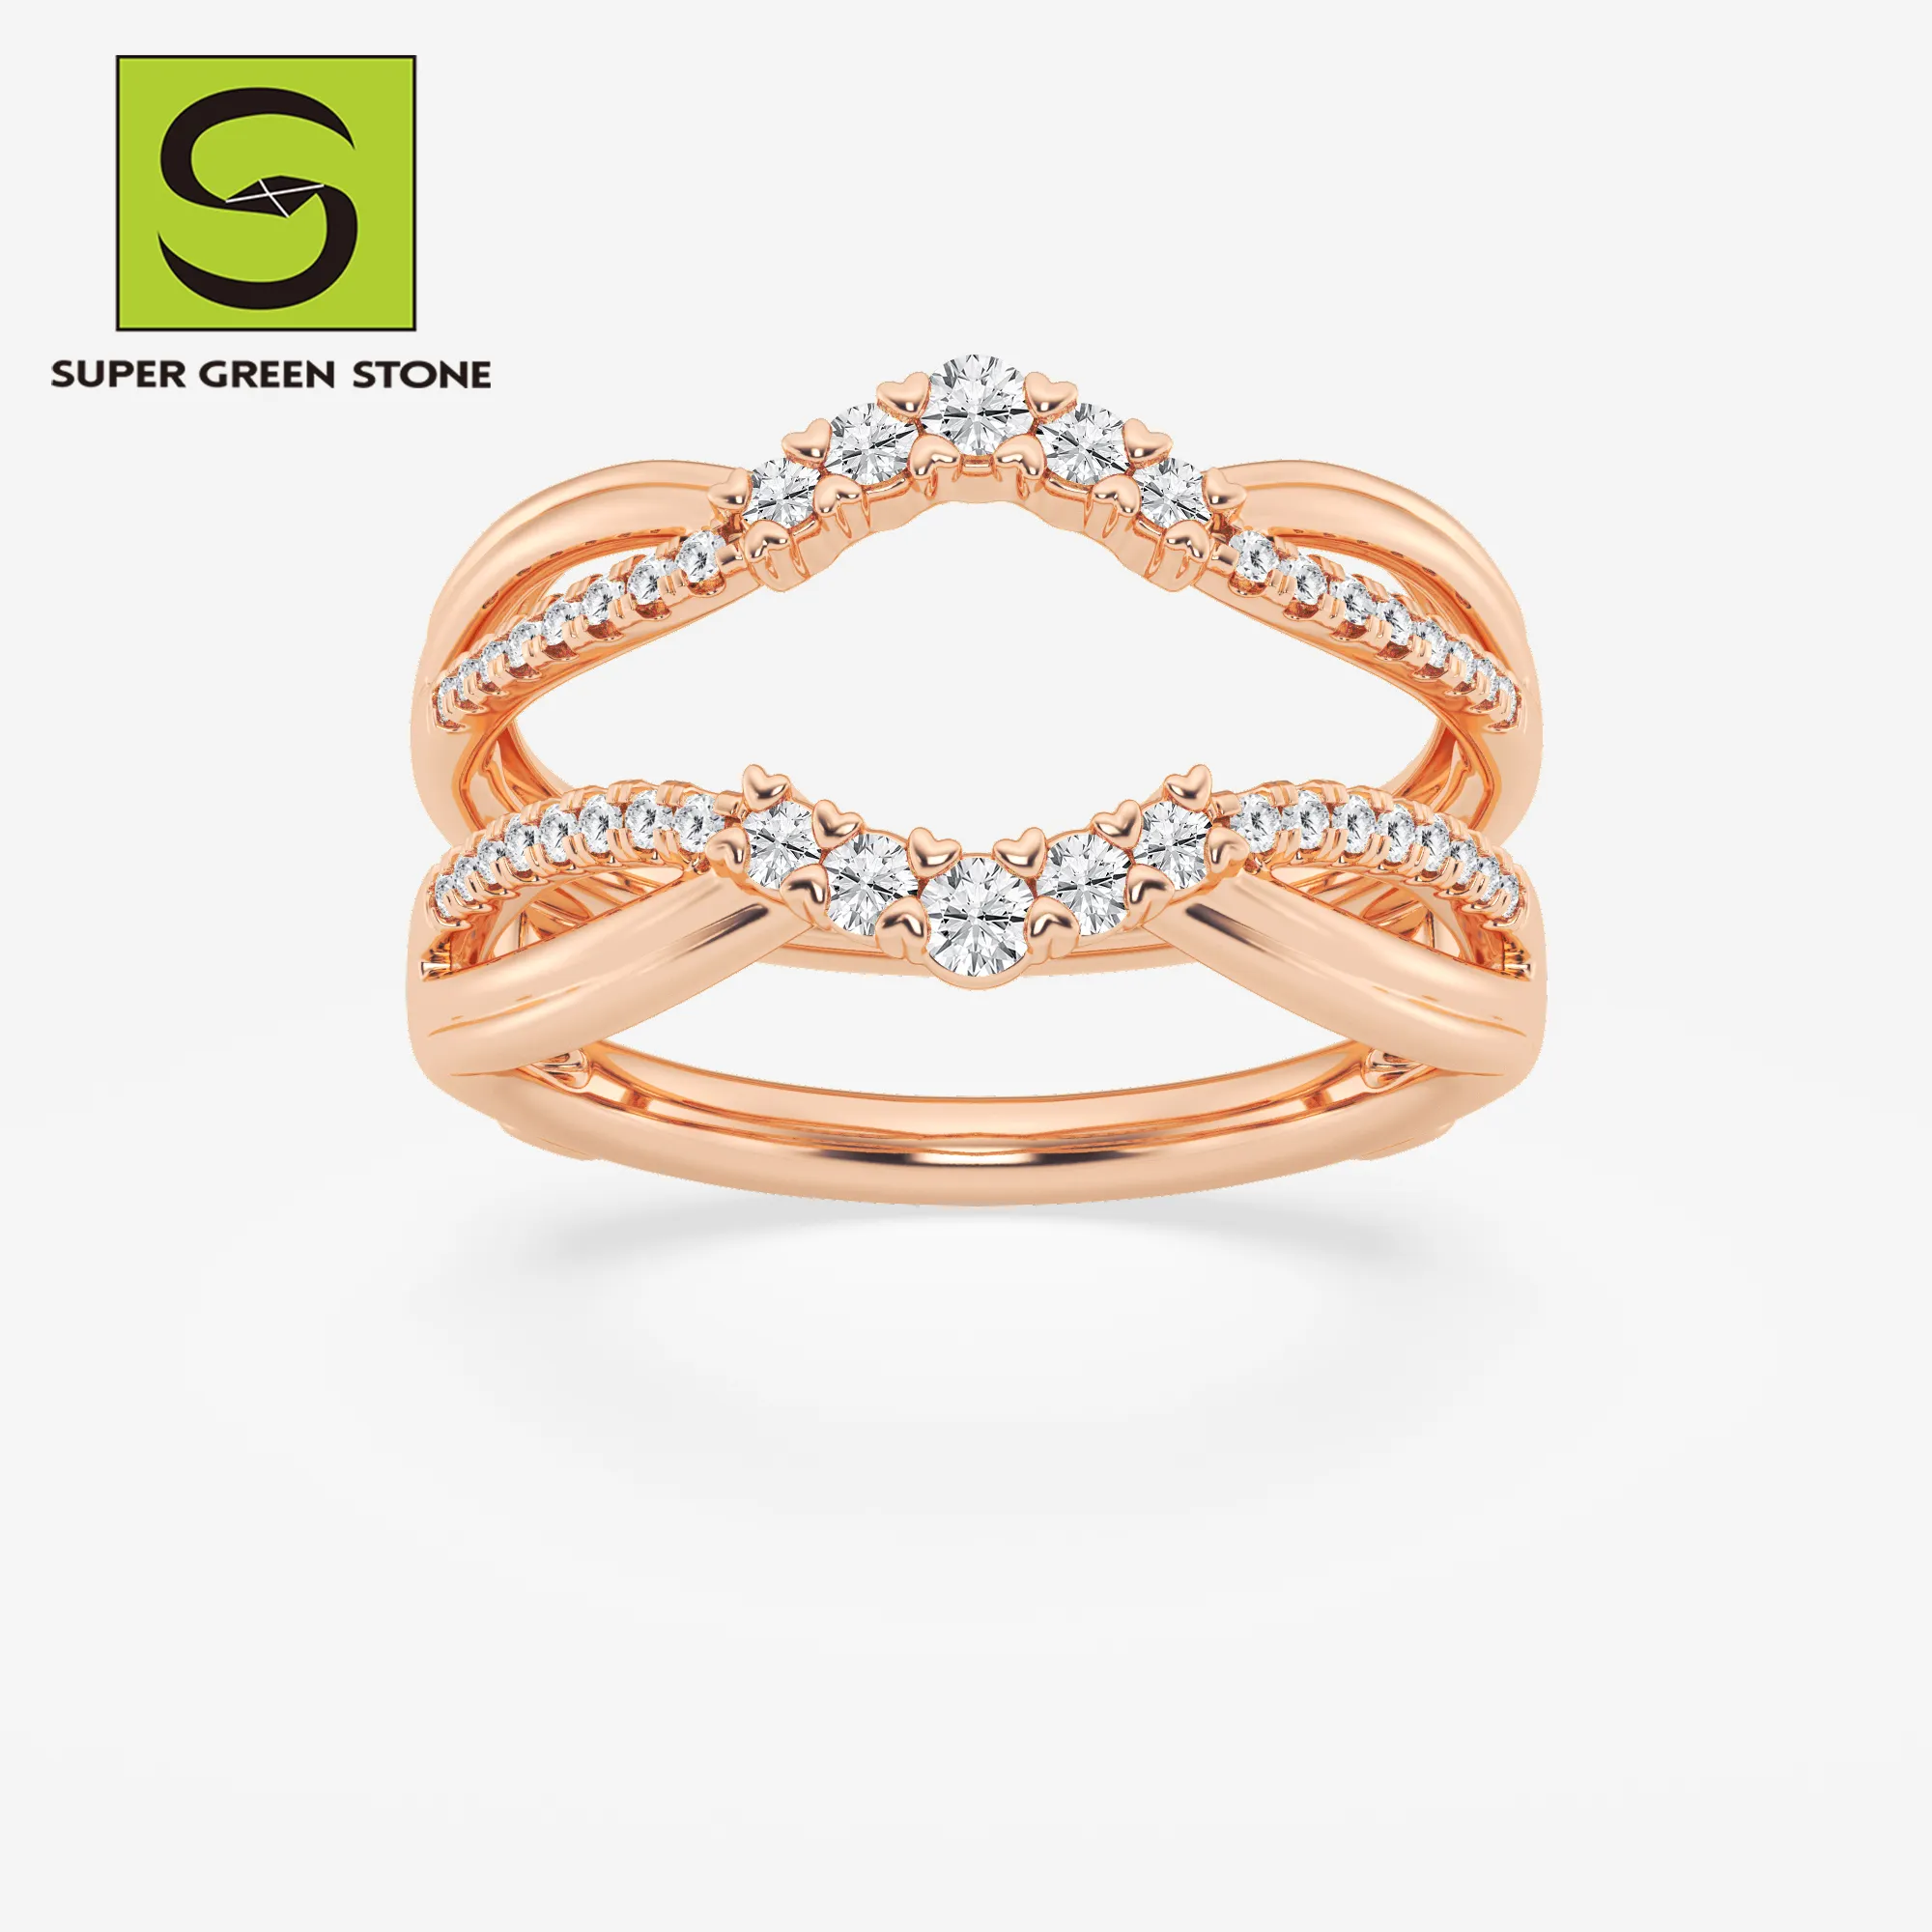 SuperGS SGSR089 en forma de círculo moda barato elegante precio especial forma hexagonal oro boda Animal serie joyería fina anillos